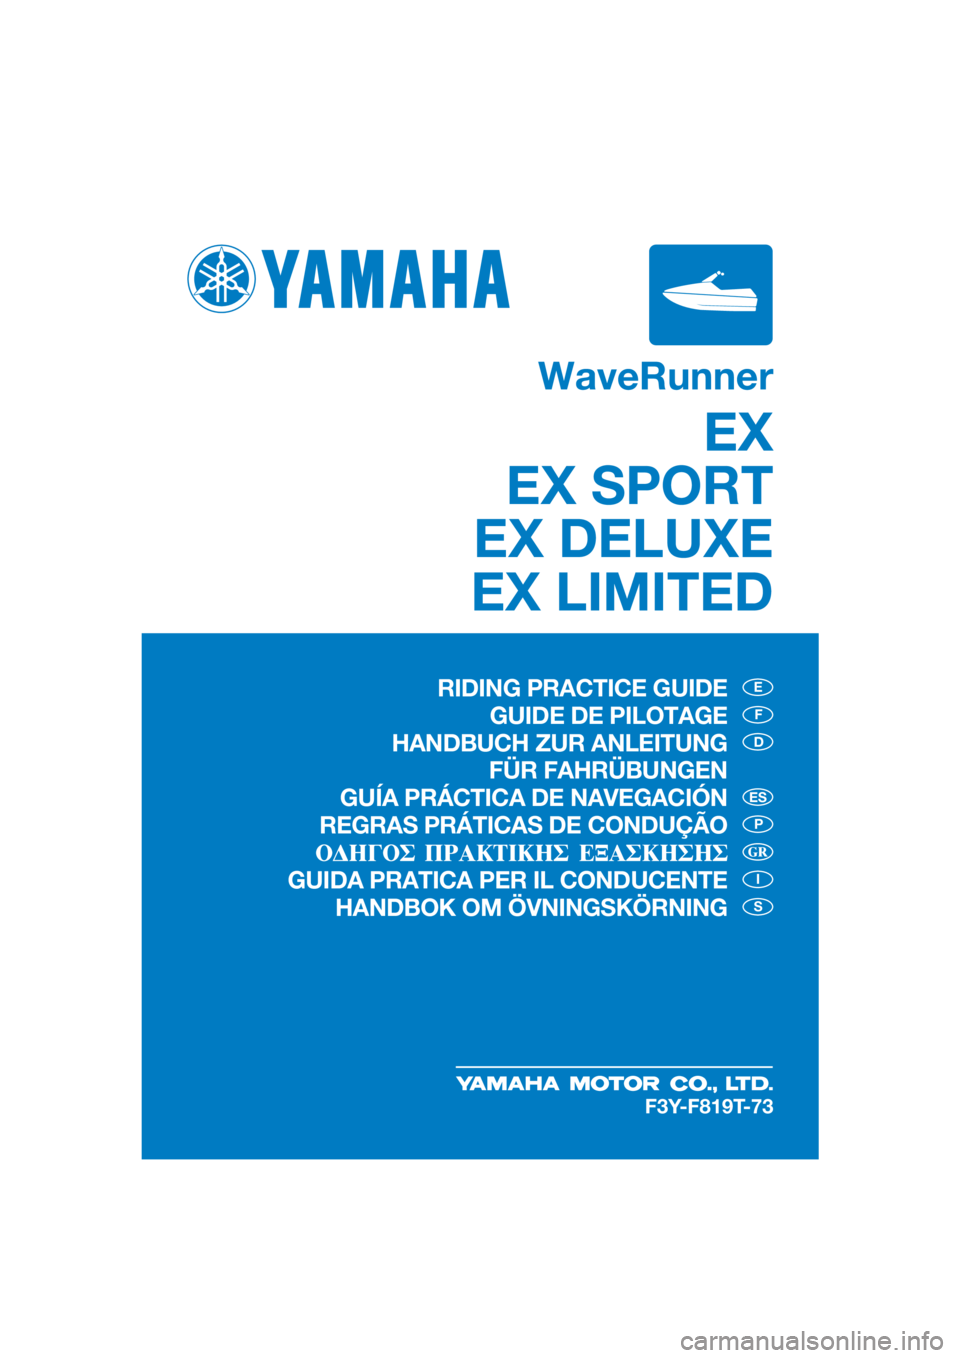 YAMAHA EX 2021  Manuale de Empleo (in Spanish) 